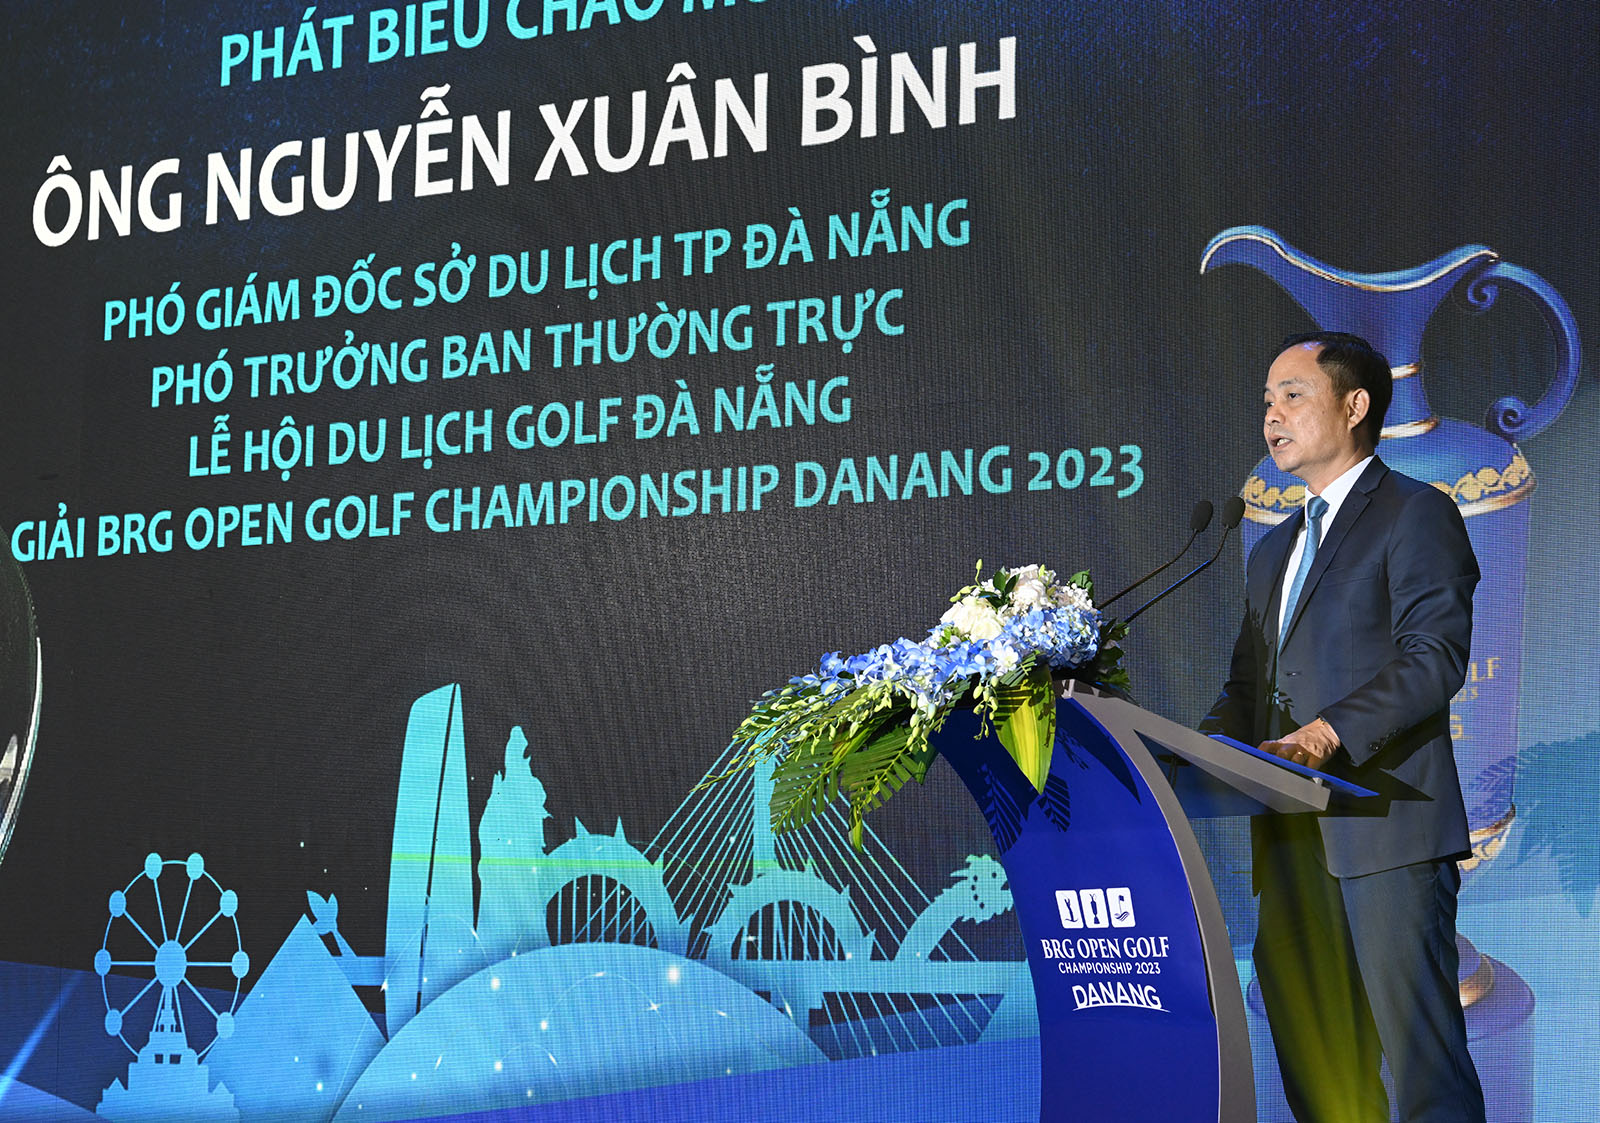 Le Hoi Du Lich Golf Da Nang 2023 Va Giai Brg Open Golf Championship Danang 2023